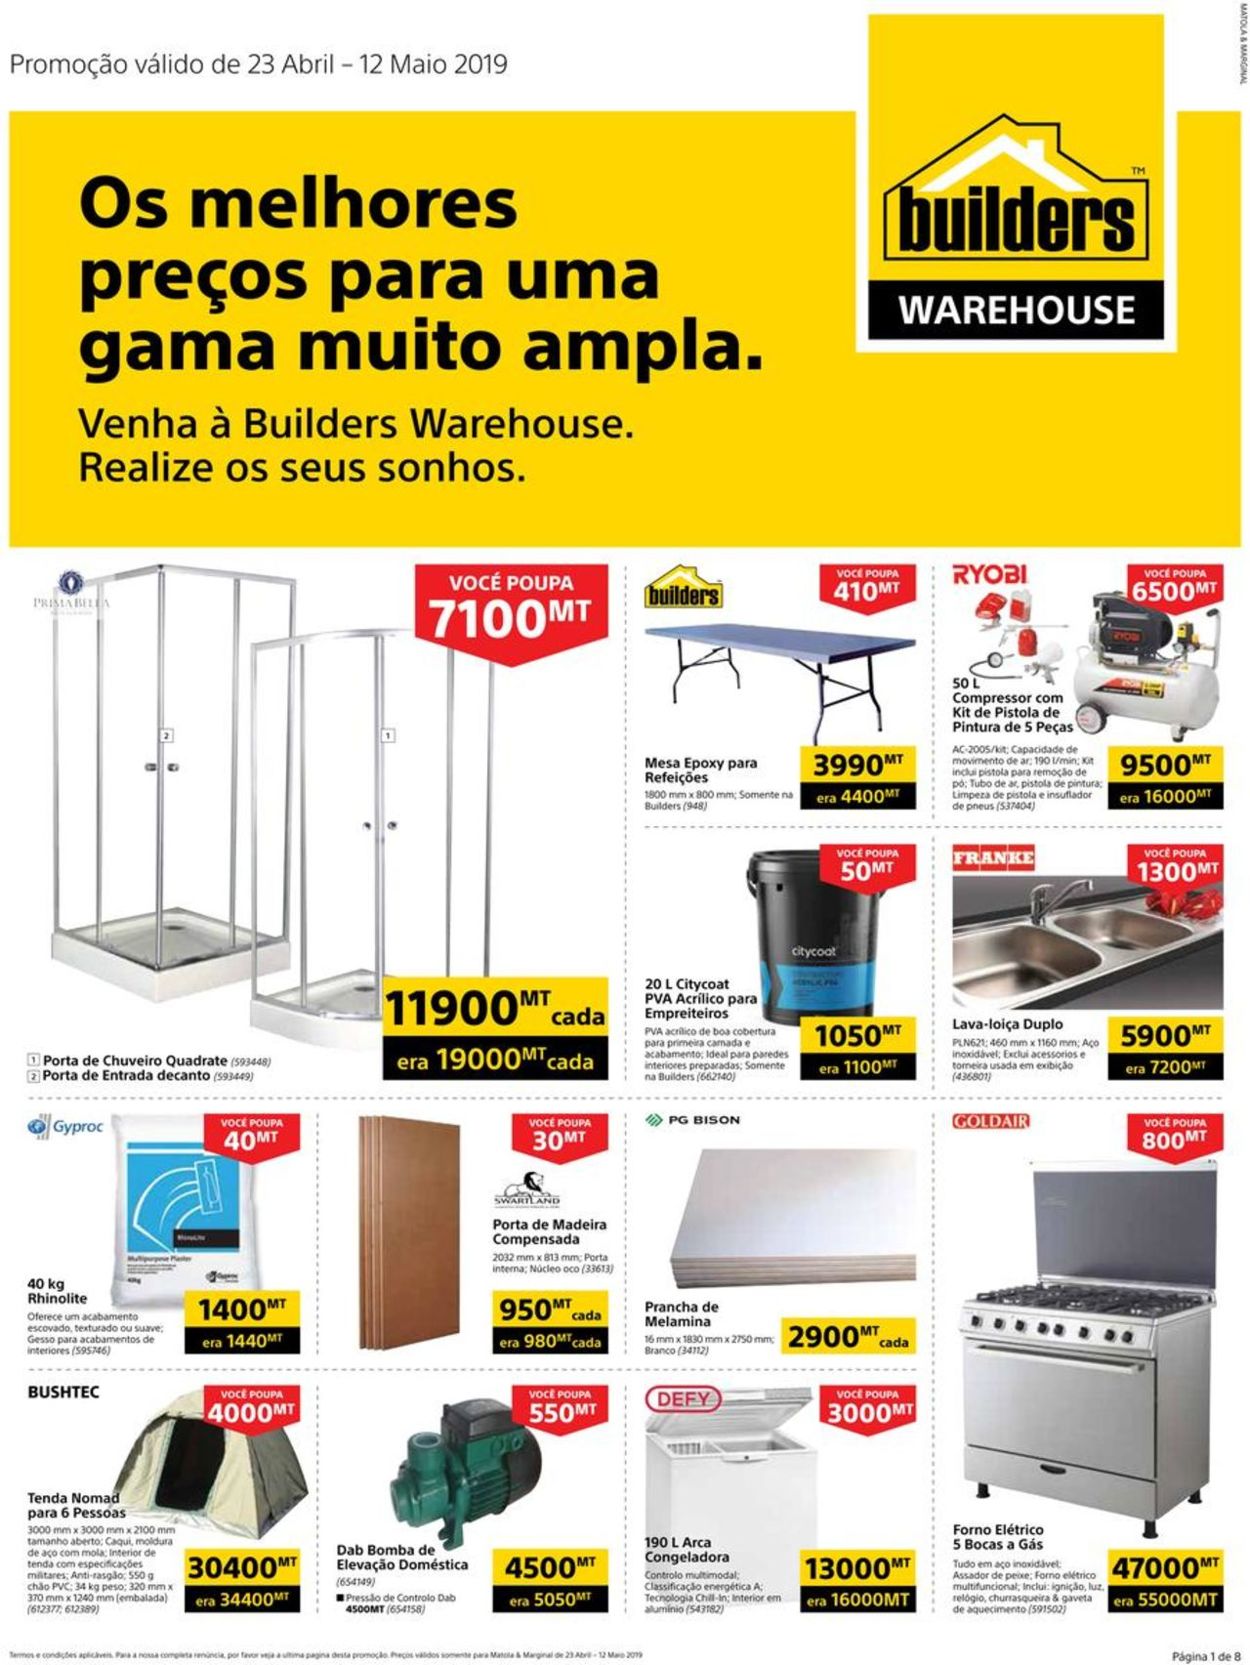 Builders Warehouse Catalogue - 2019/04/23-2019/05/12